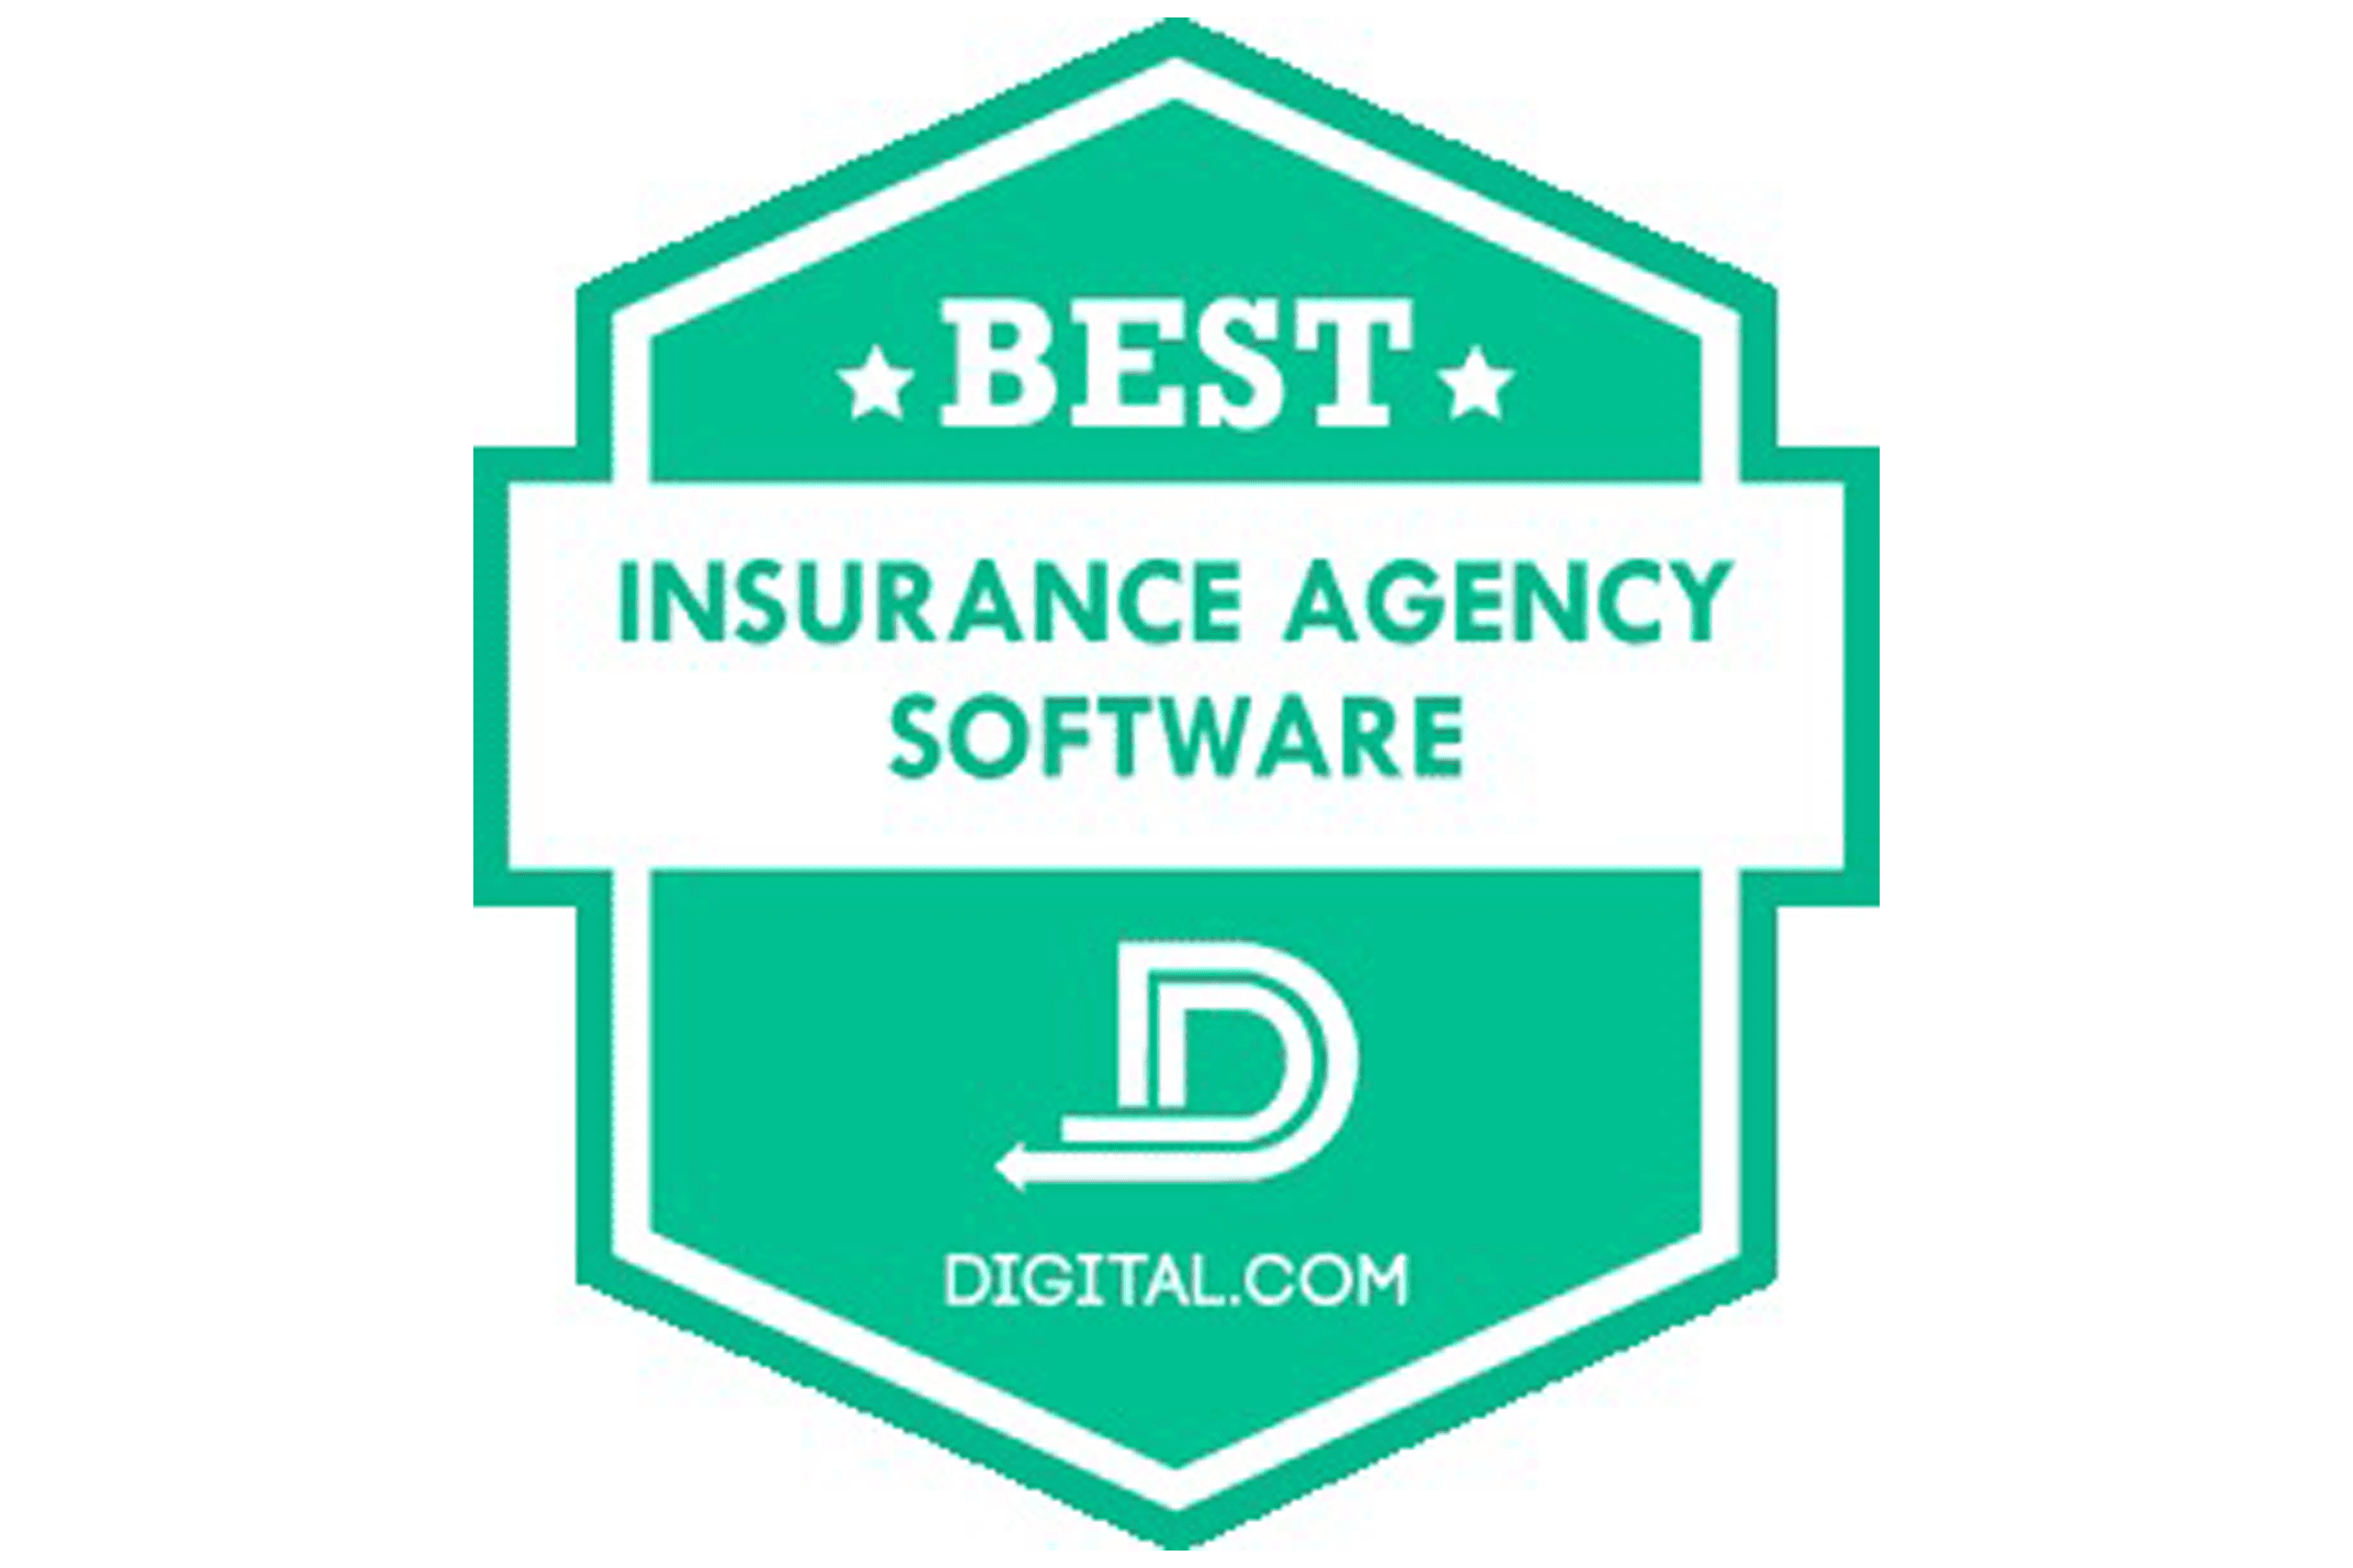 Sibro Awarded Best Insurance Agency Software by Digital.com